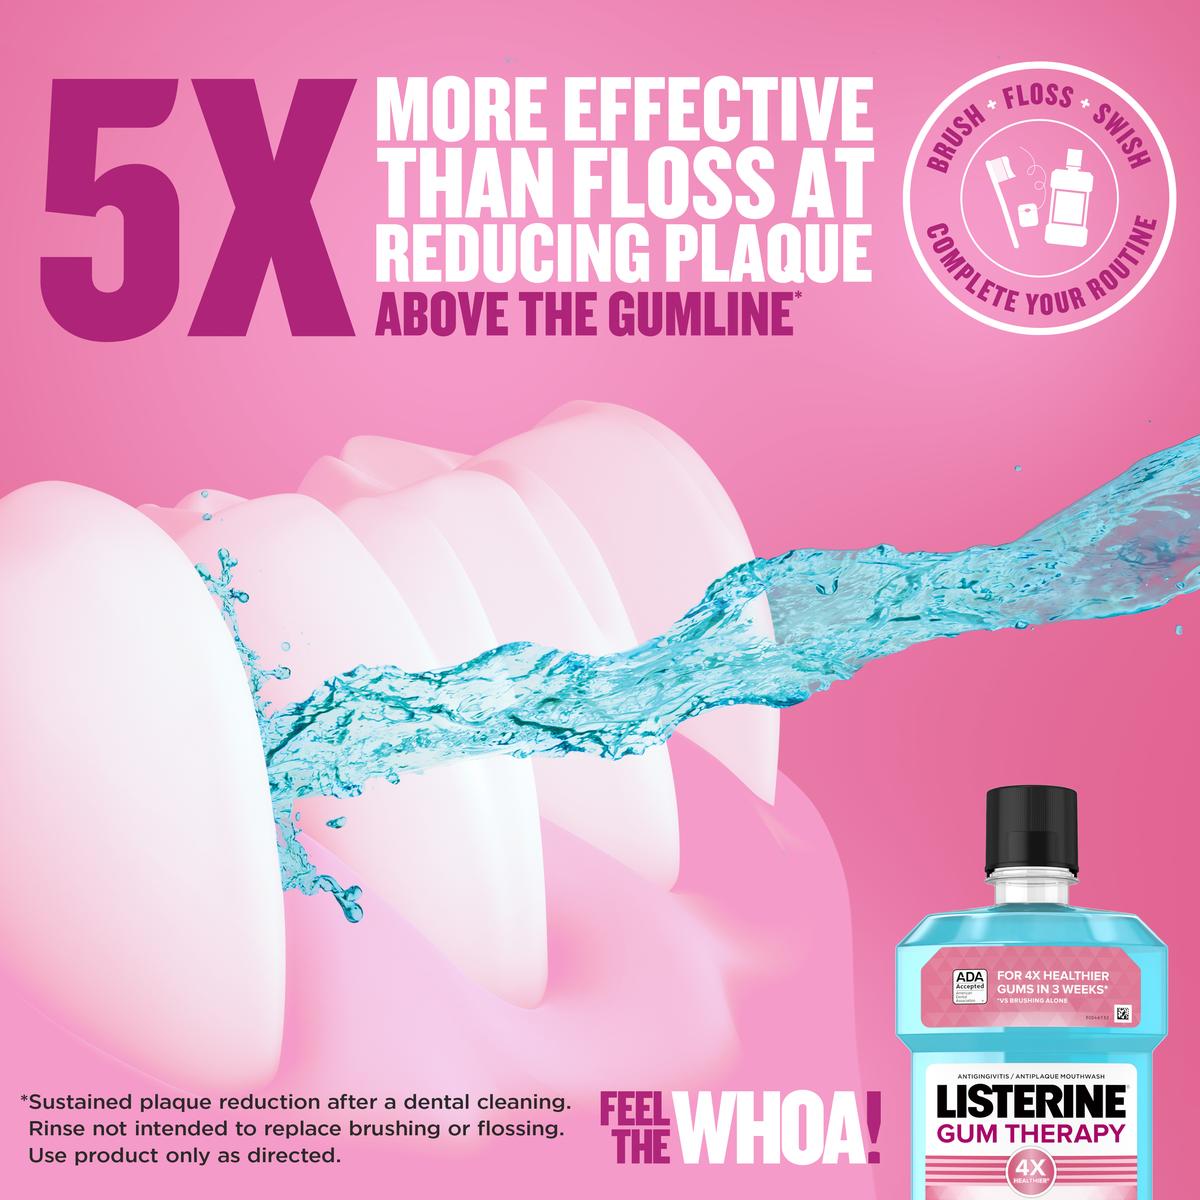 Gum Therapy destroys 5x more plaque above the gumline